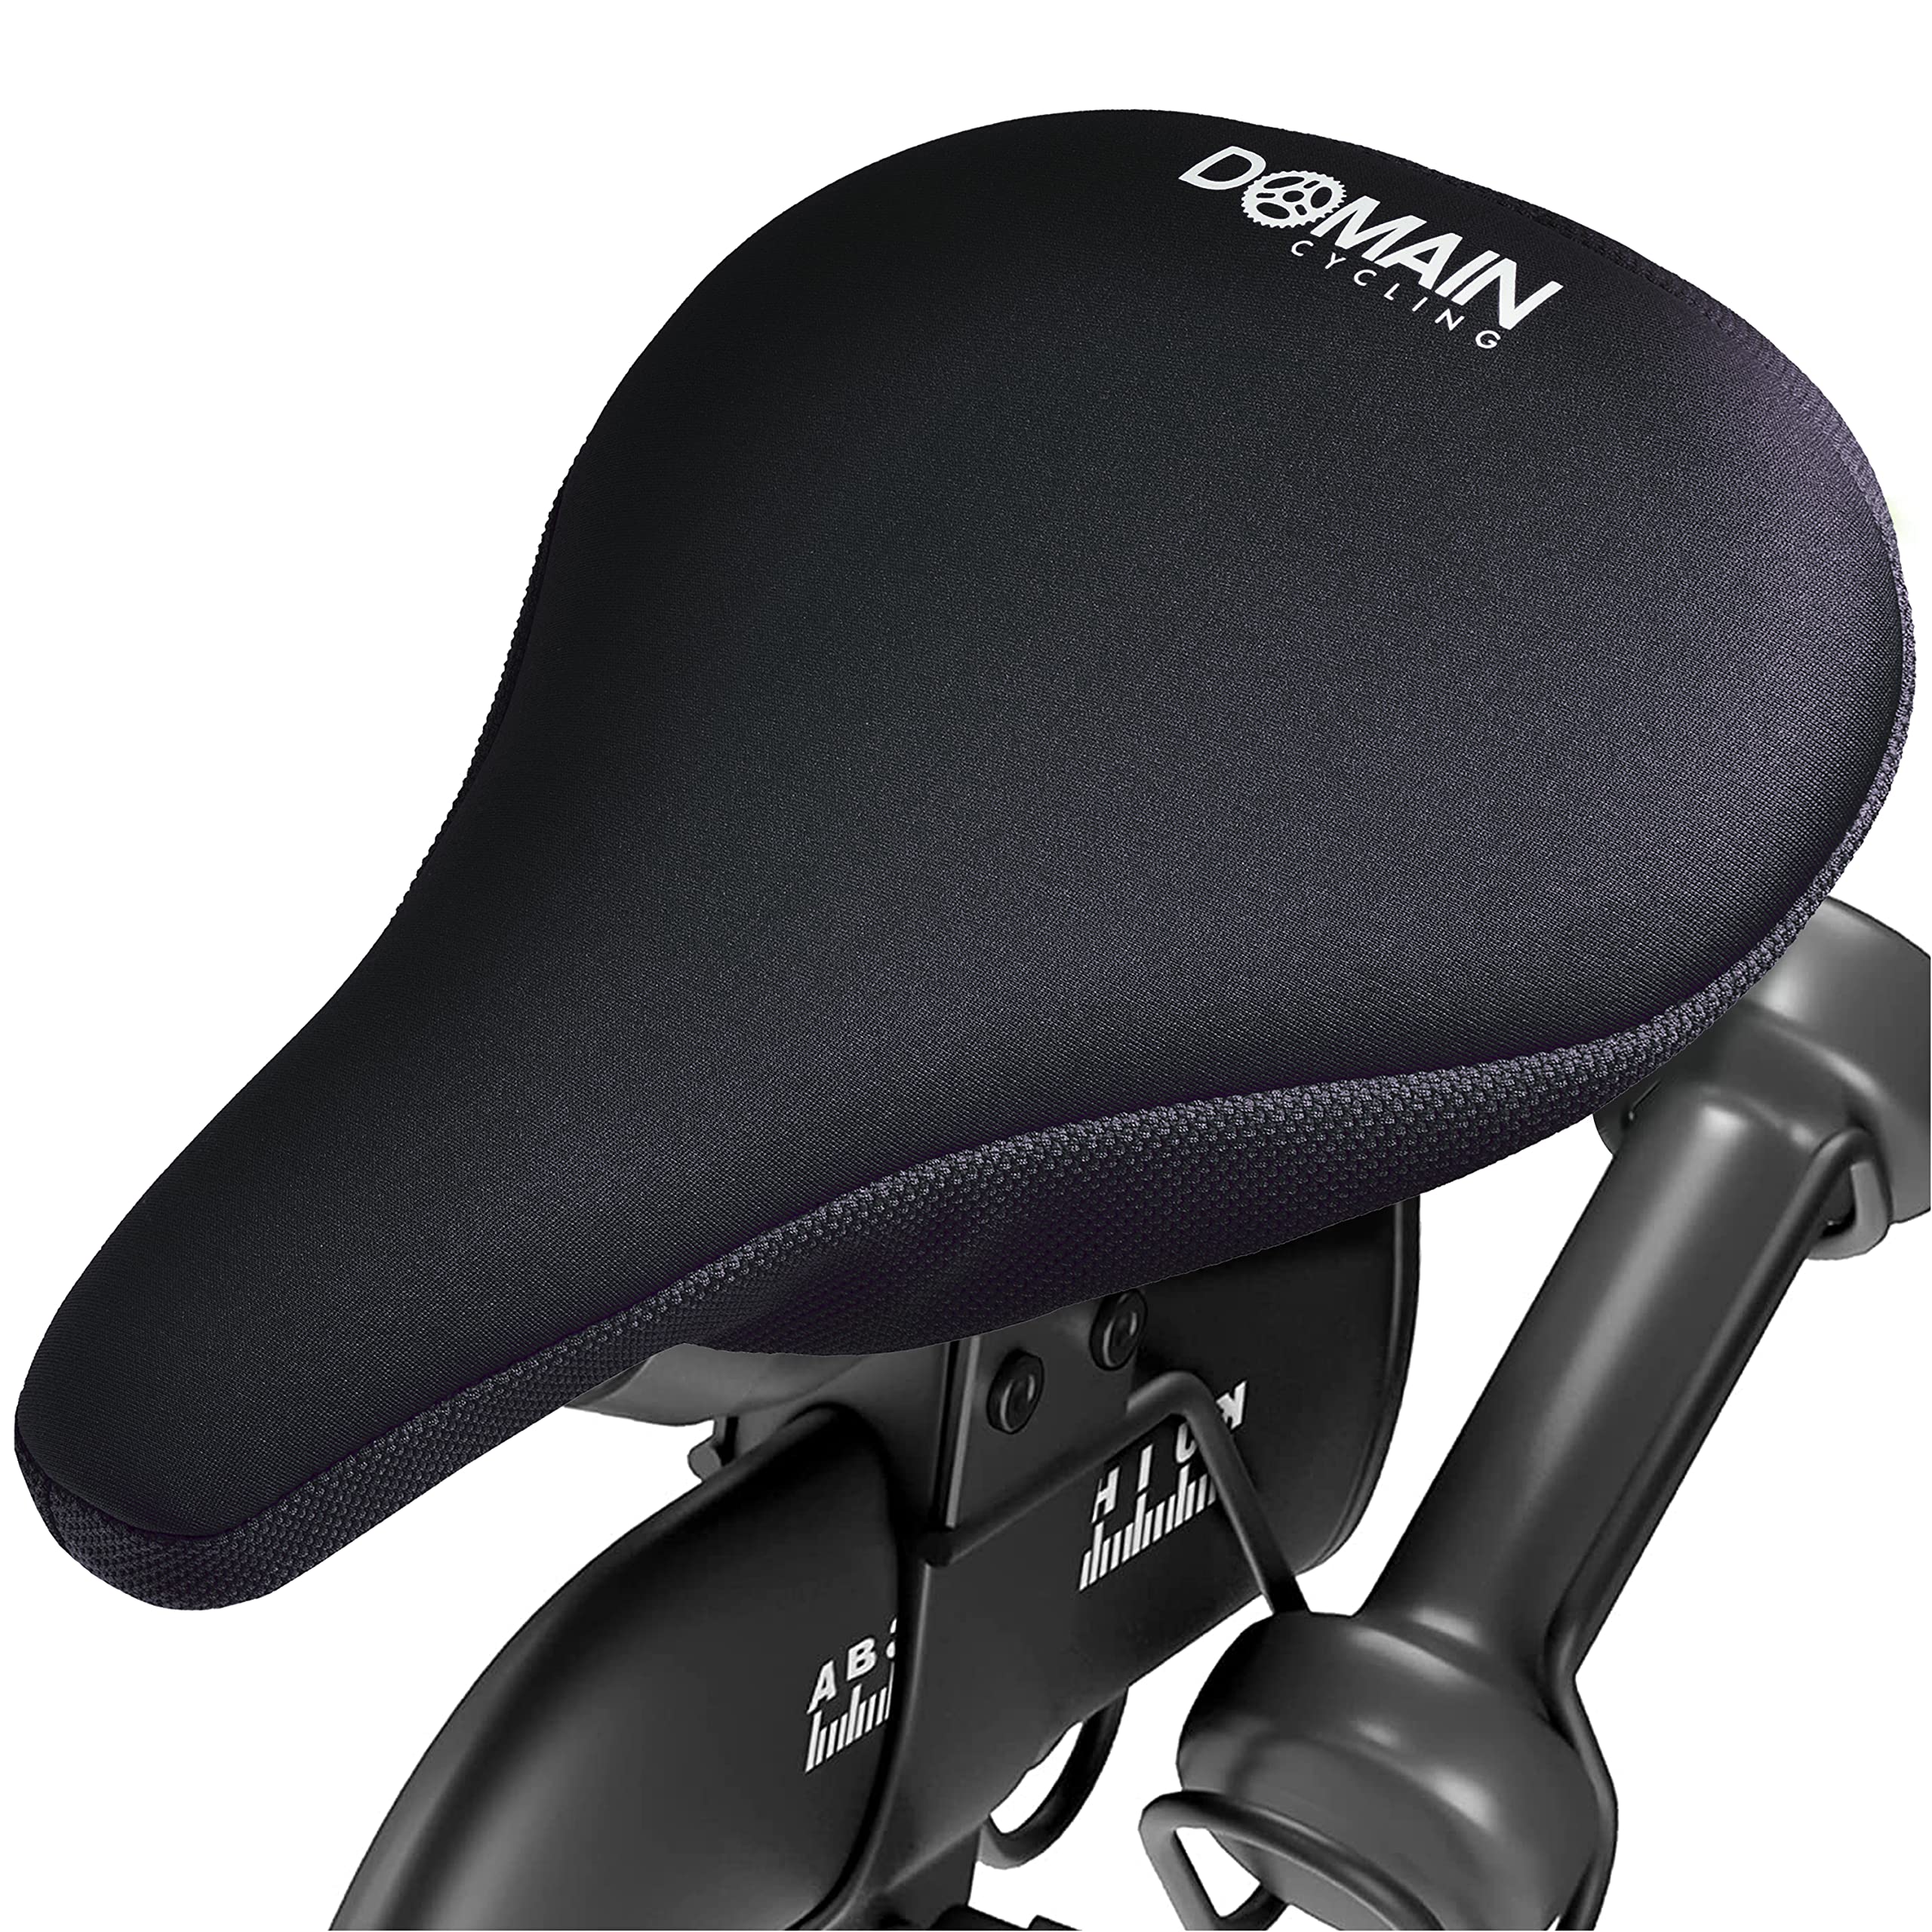 Comfortable Bicycle Seat - Wide Gel Bike Seat Cushion for Women